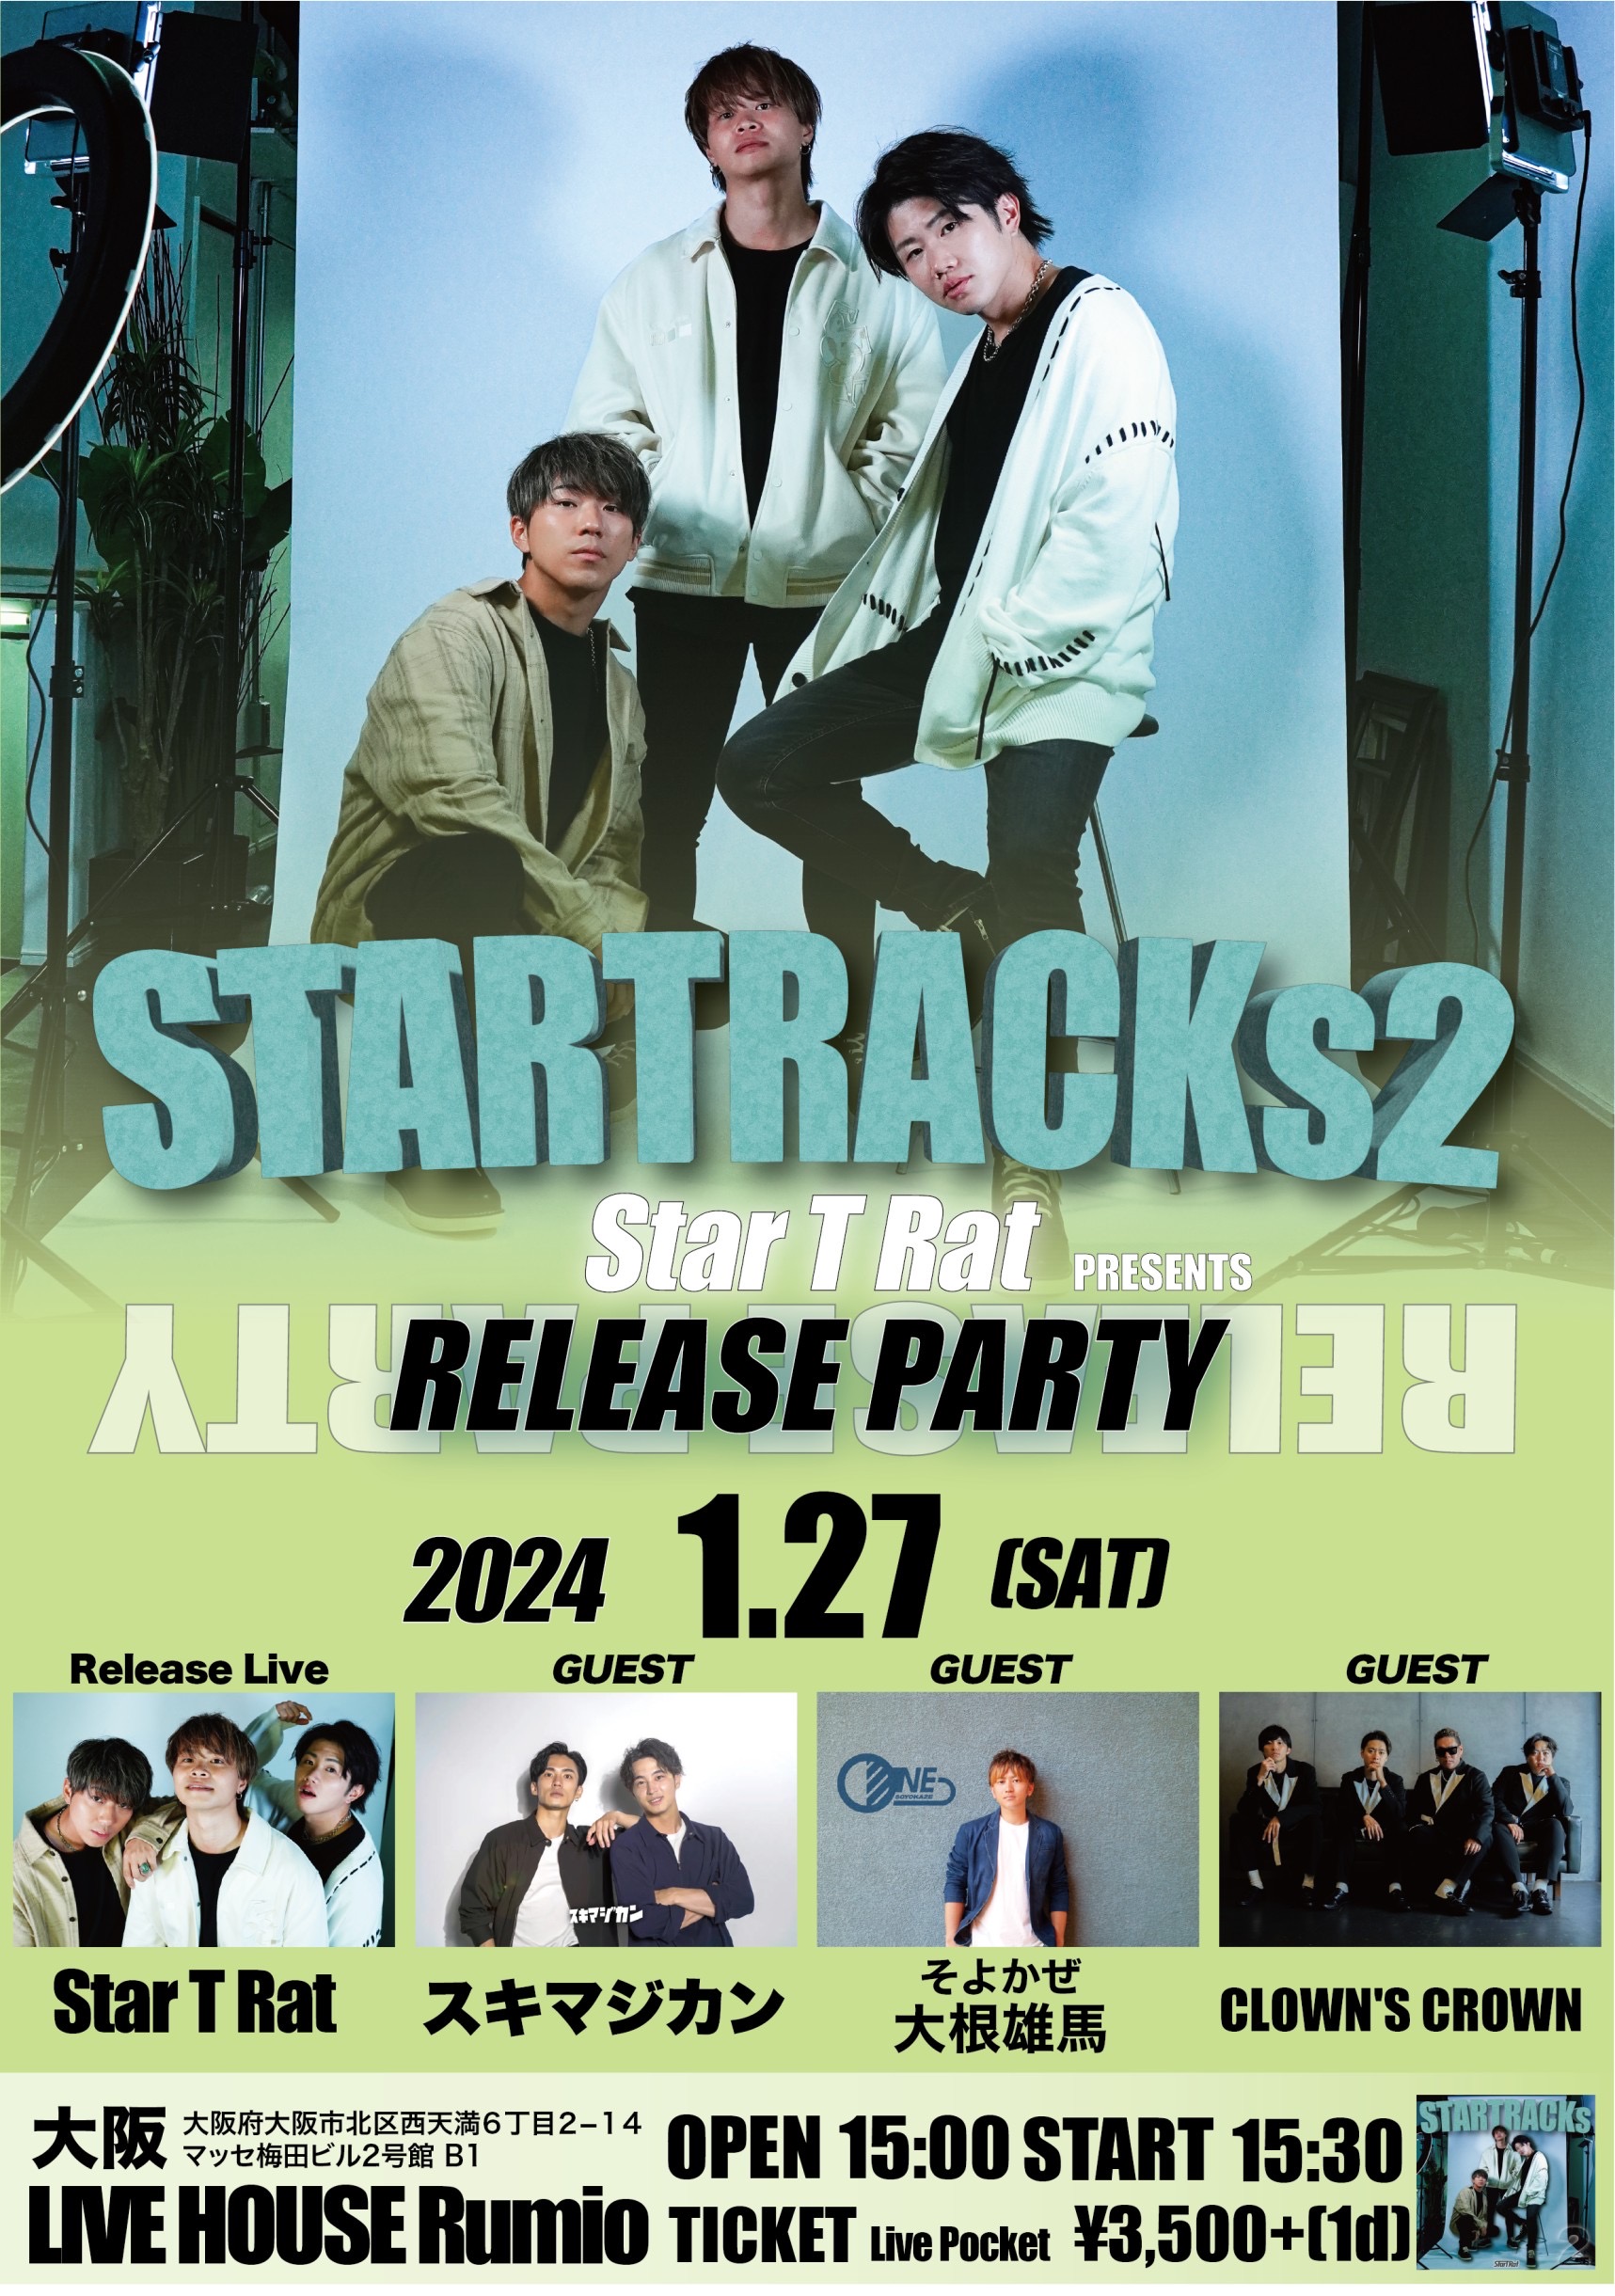 STARTRACKs2 RELEASE PARTY 大阪編